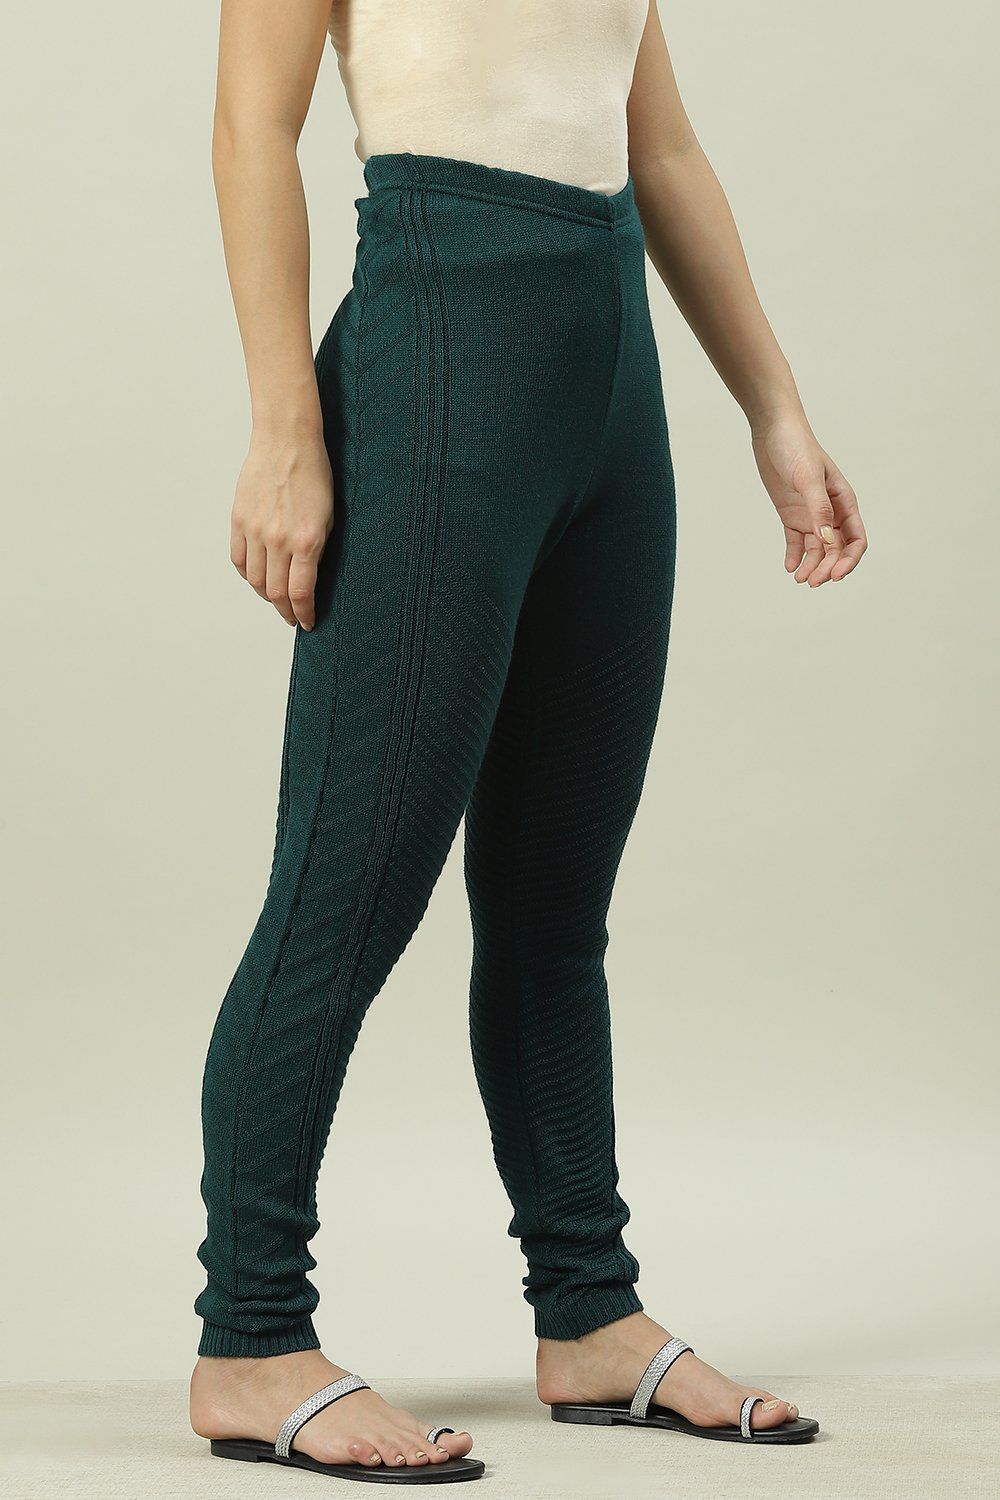 Buy Pixie Woolen Leggings for Women, Winter Bottom Wear Combo Pack of 4  (Beige, Dark Green, Red, Navy Blue) - Free Size Online at Best Prices in  India - JioMart.